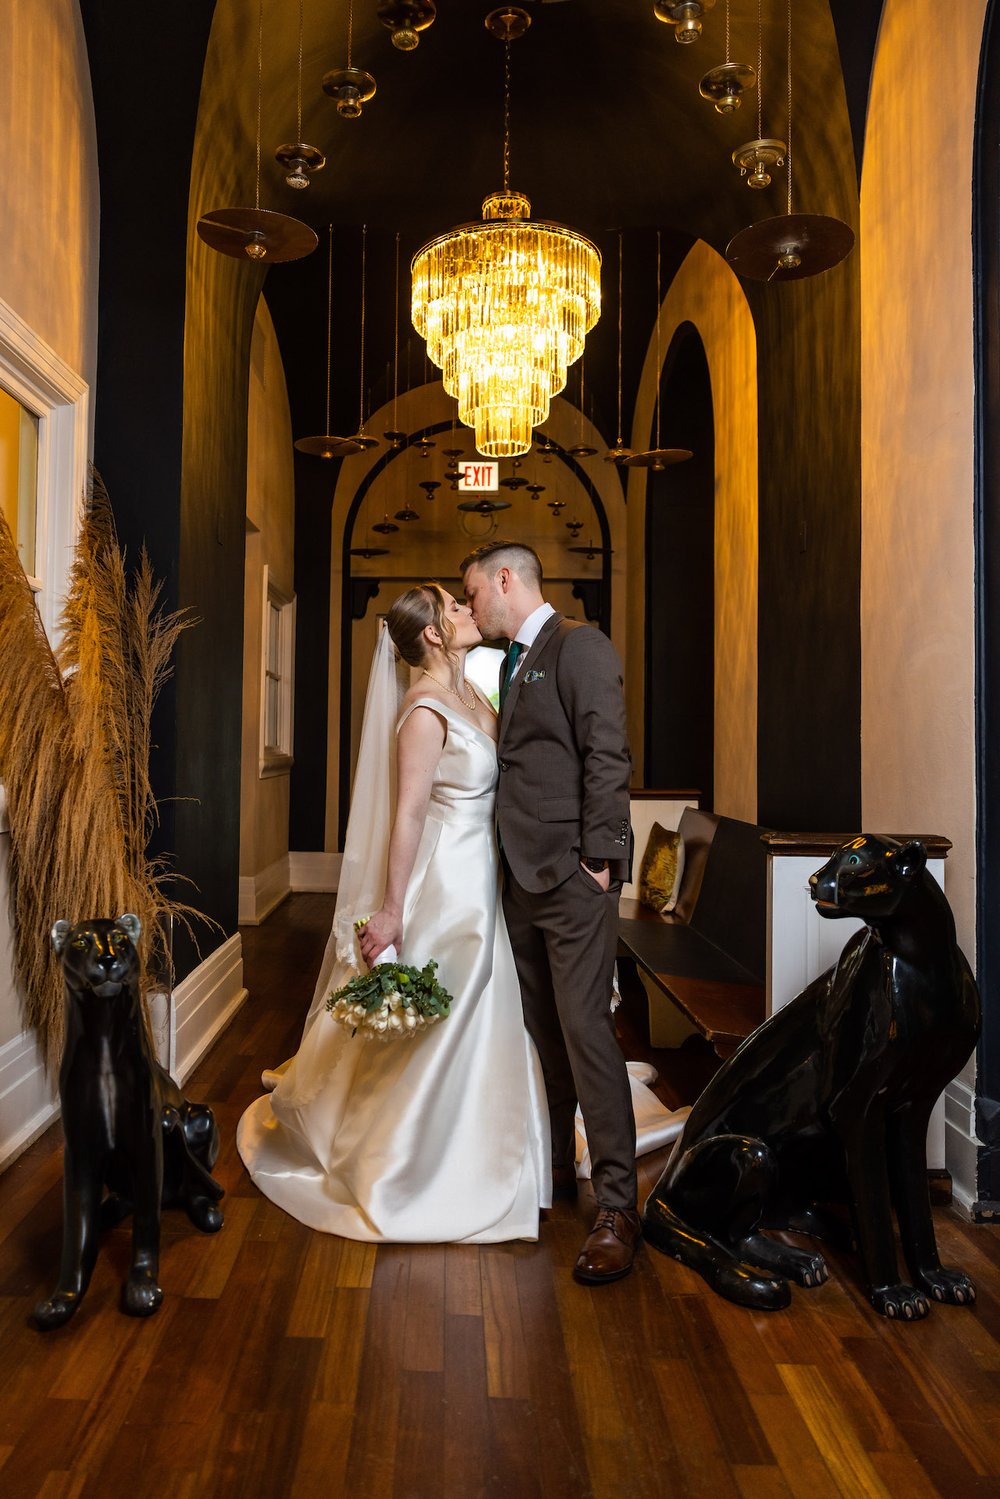 Alex Maldonado Photography | Chicago Wedding and lifestyle Photographer | wedding photos selina hotel creative indoor wedding portraits with unique decor